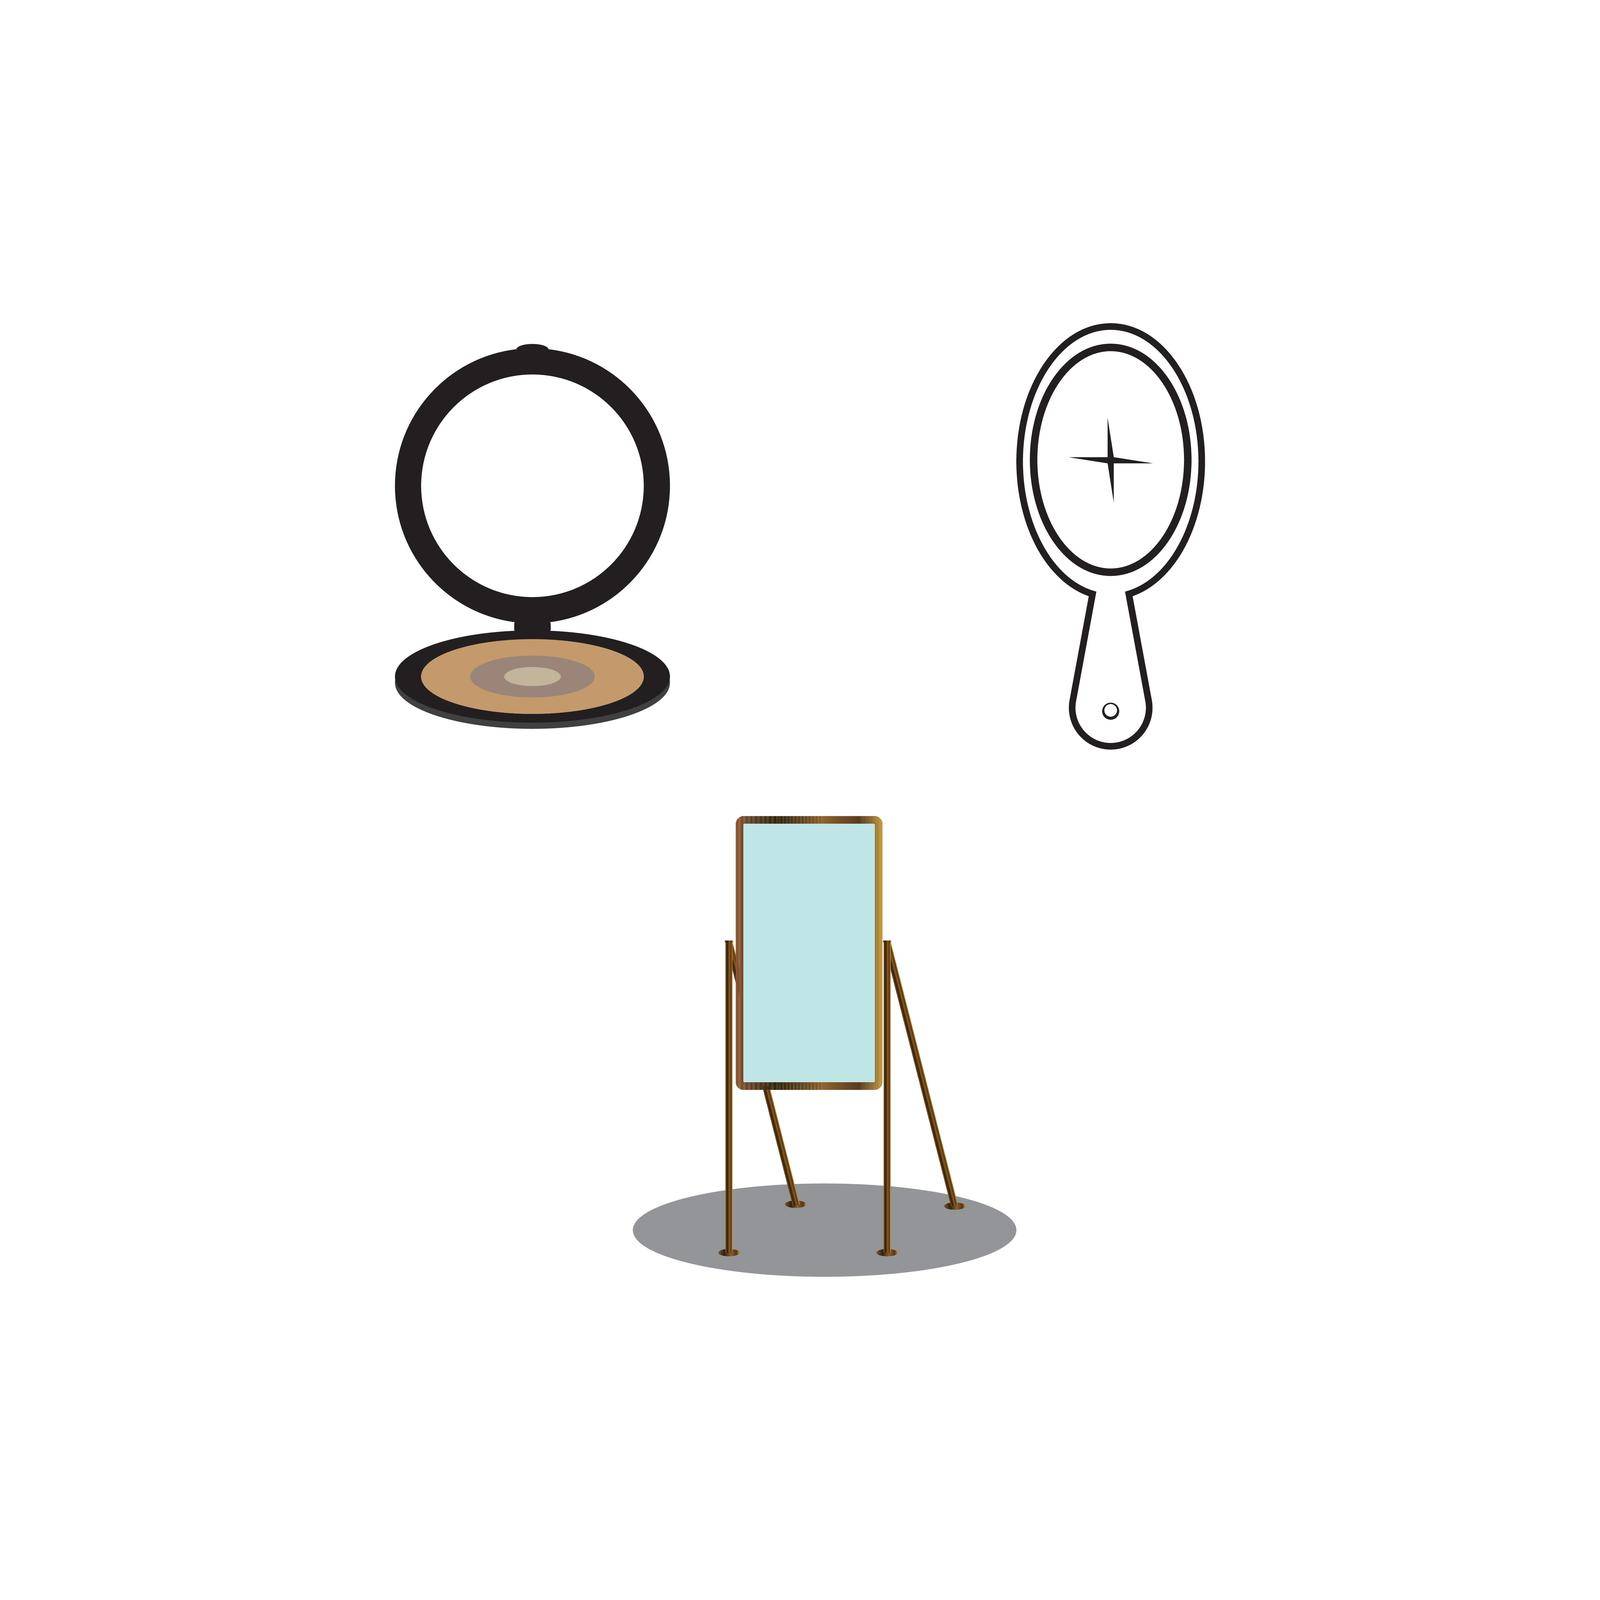 mirror logo vector icon design illustration